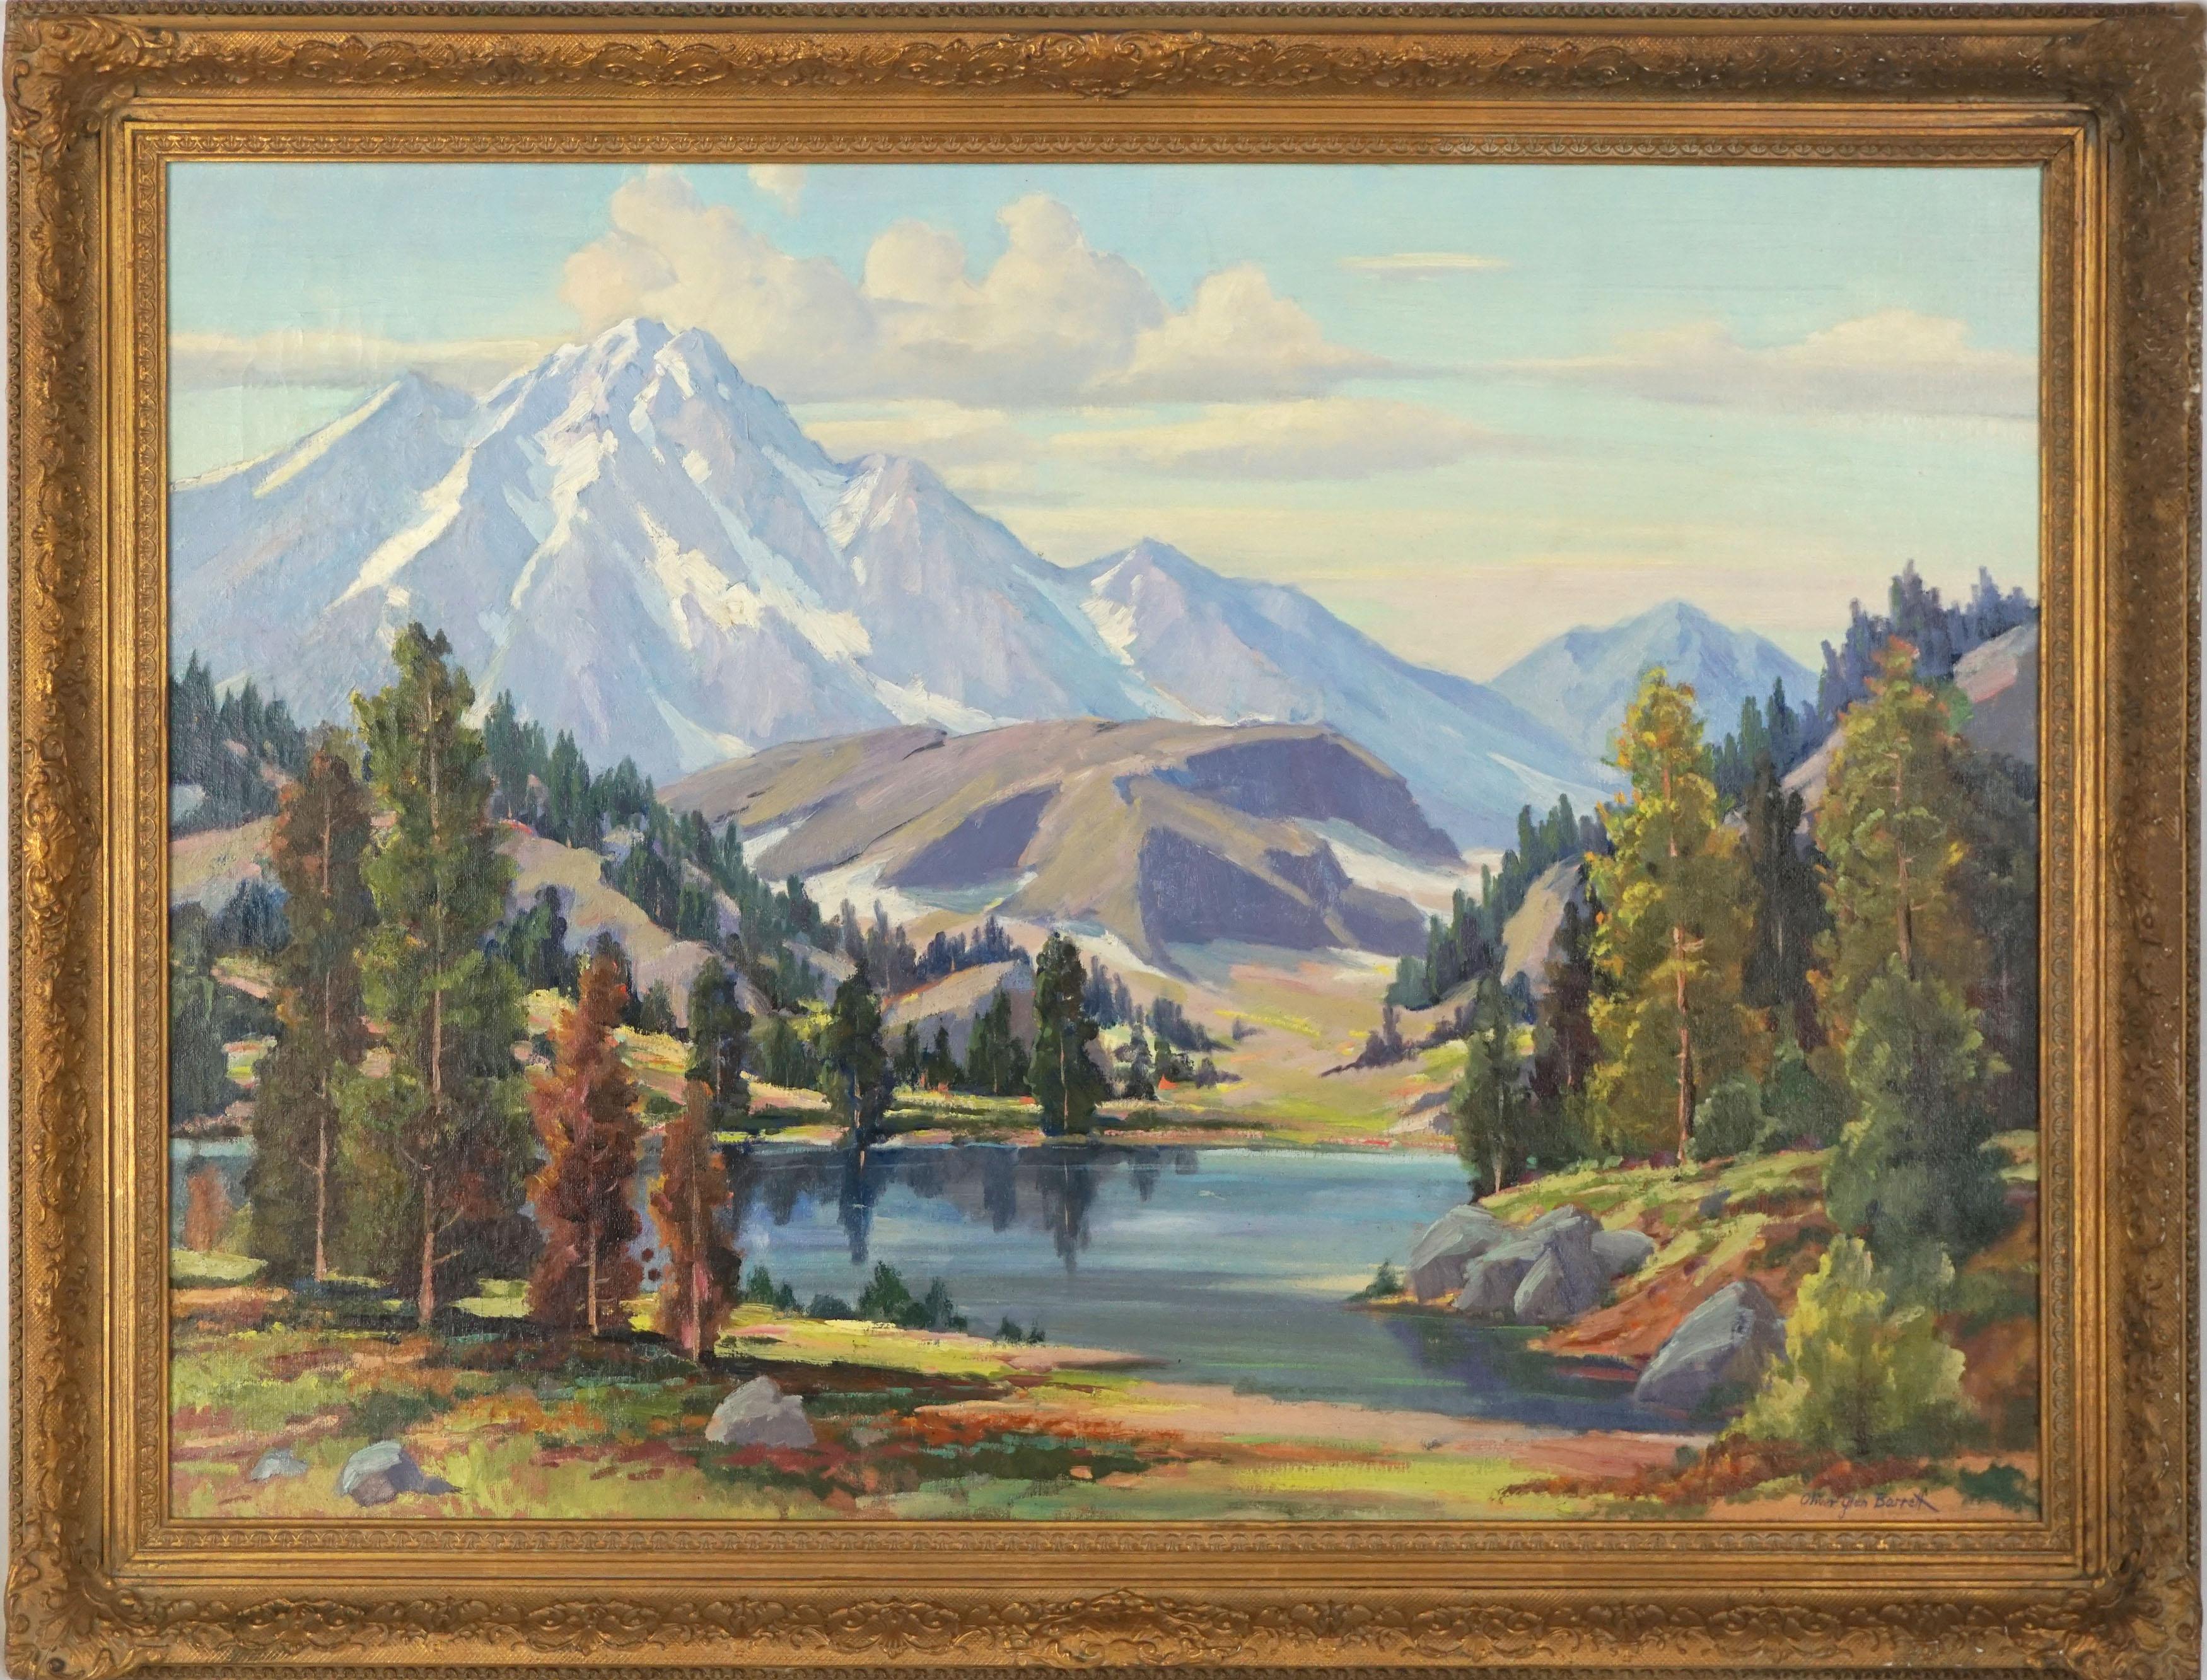 Oliver Glen Barrett Landscape Painting - 1940s Sierra Mountain Landscape -- "Sierra Grandeur" 